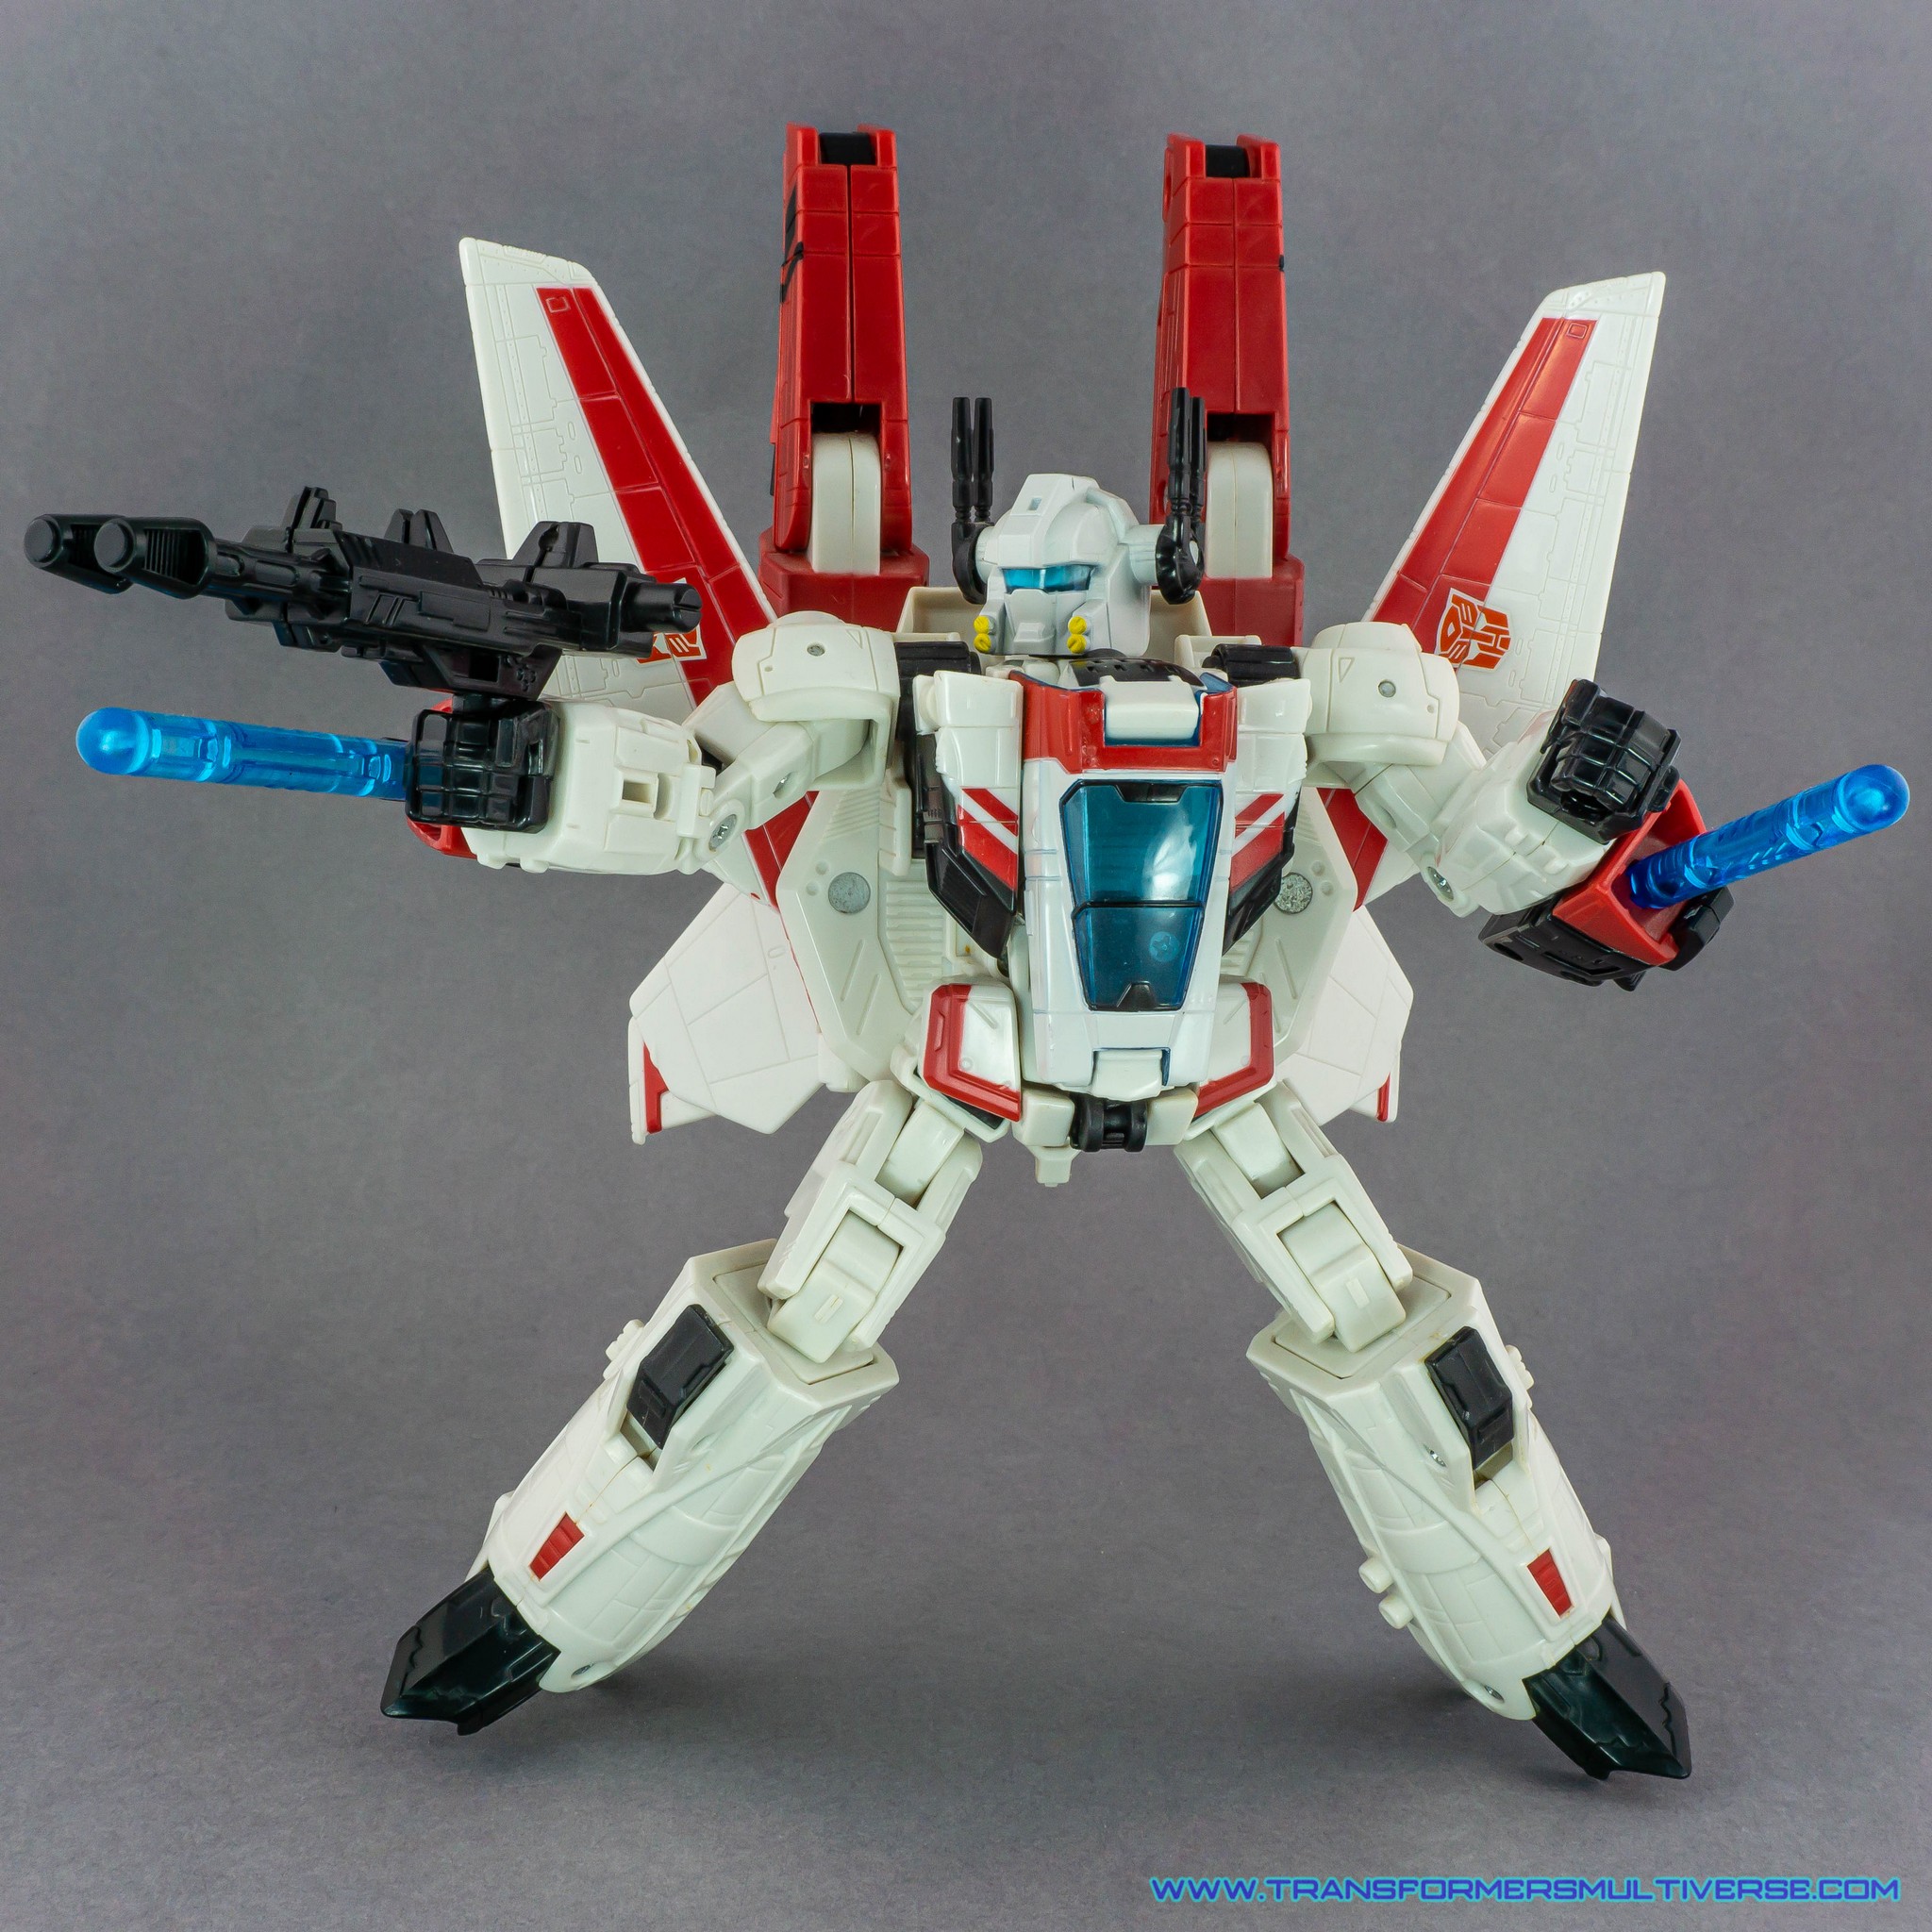 Transformers Classics Jetfire with armour, posed, alternate angle